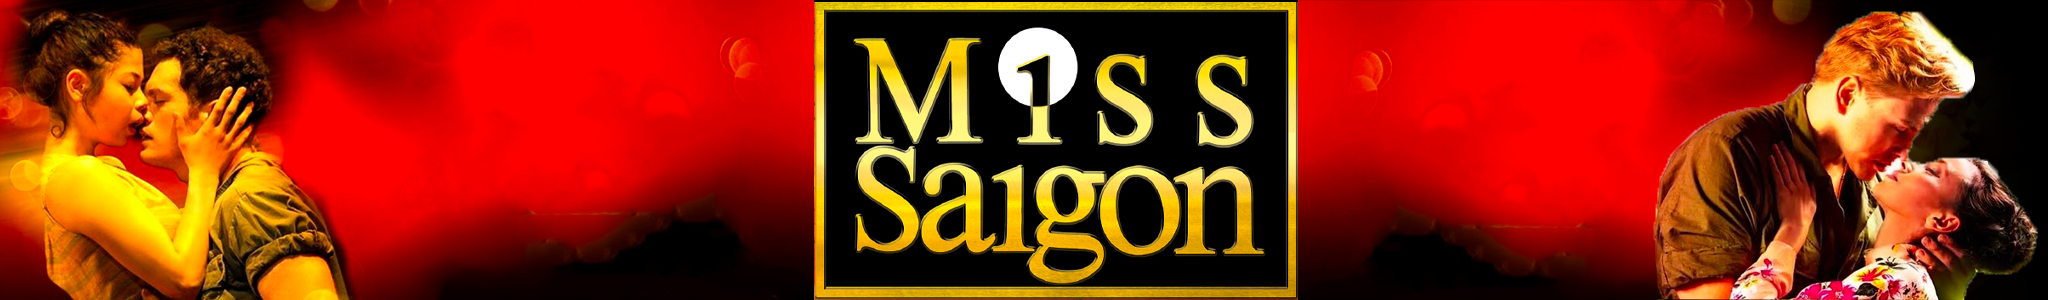 Miss Saigon Broadway Show